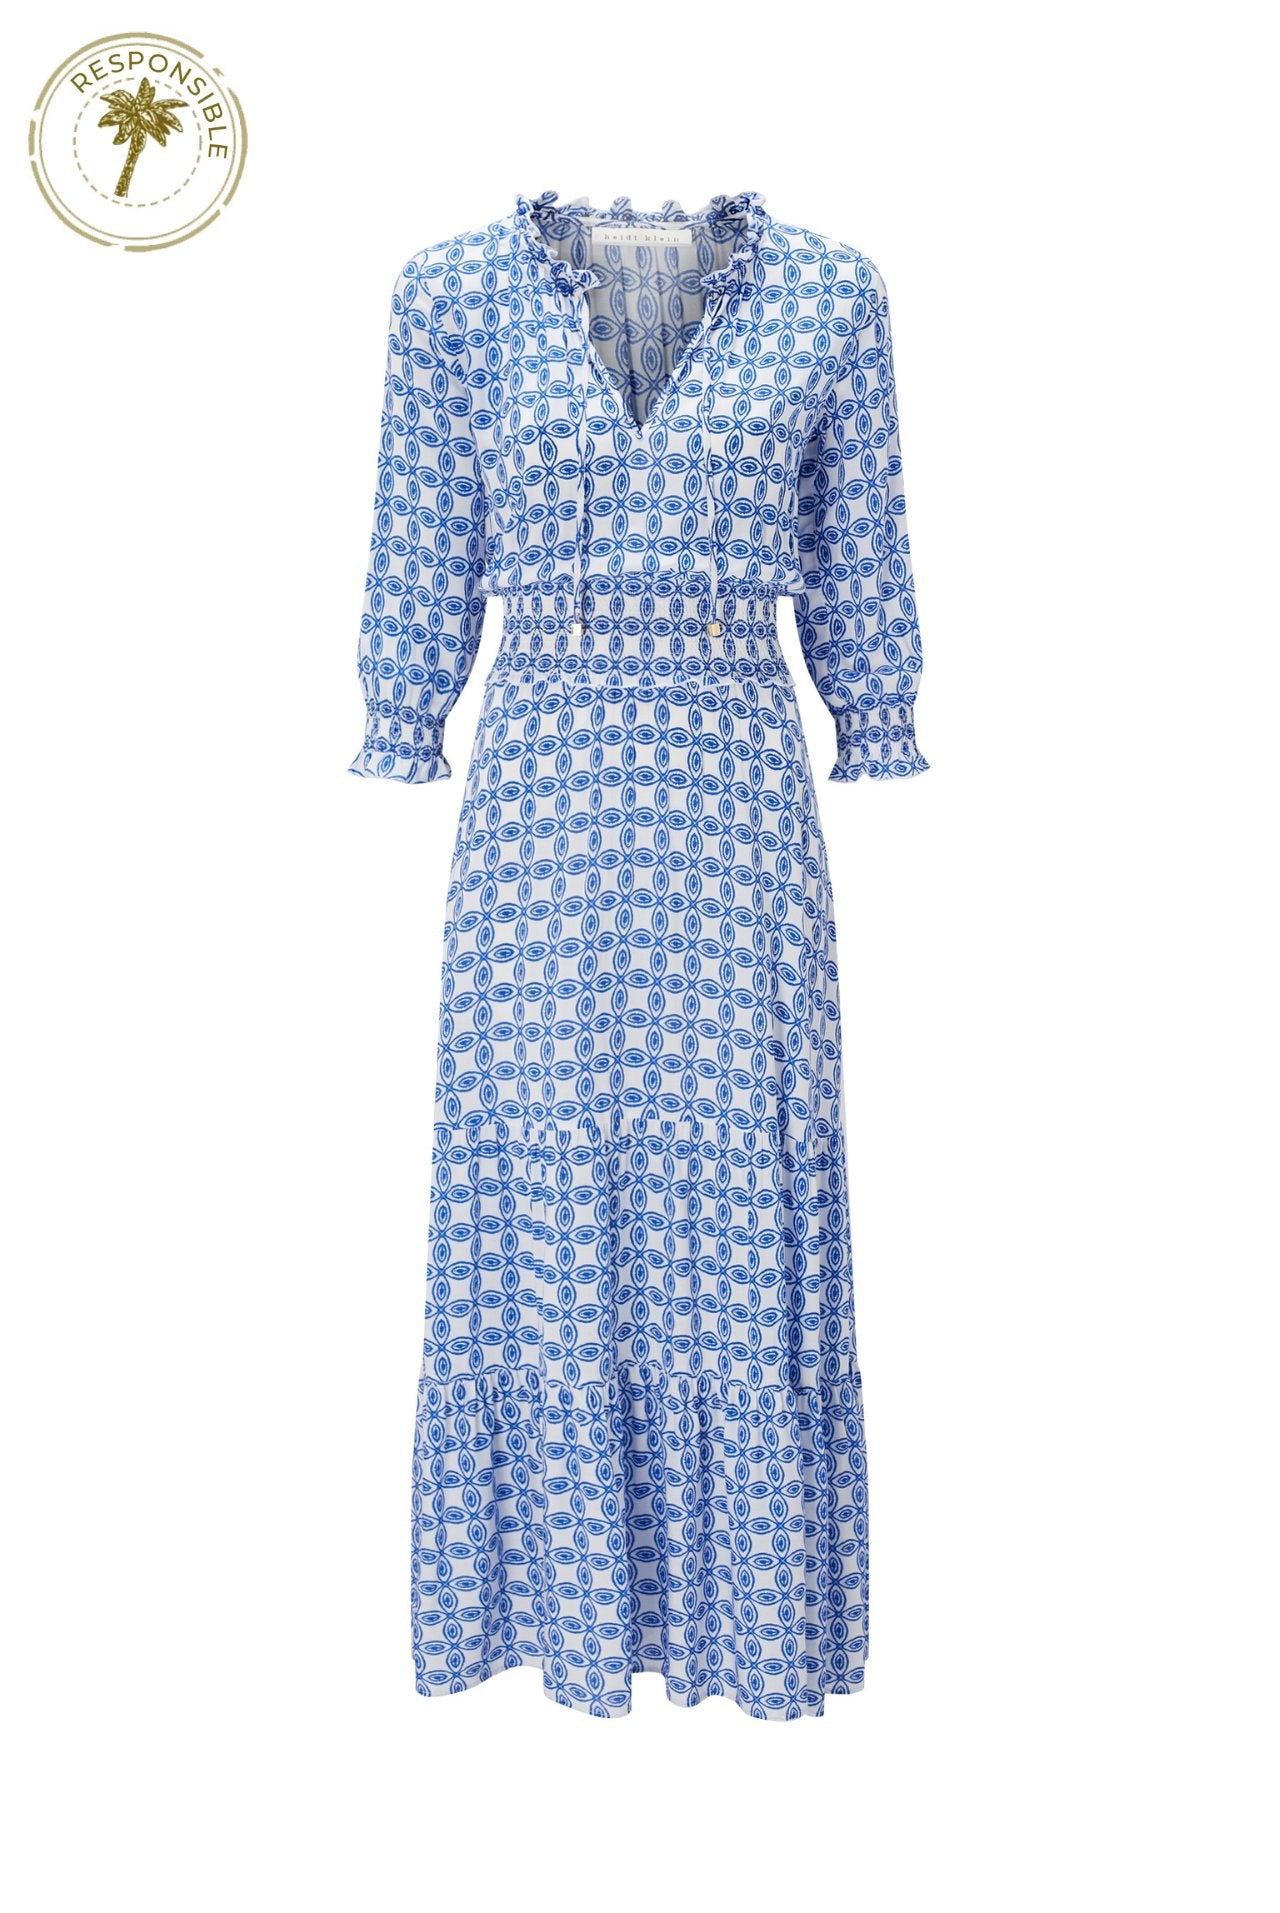 Mahoe Bay Smocked Waist Maxi Dress - Heidi Klein - UK Store